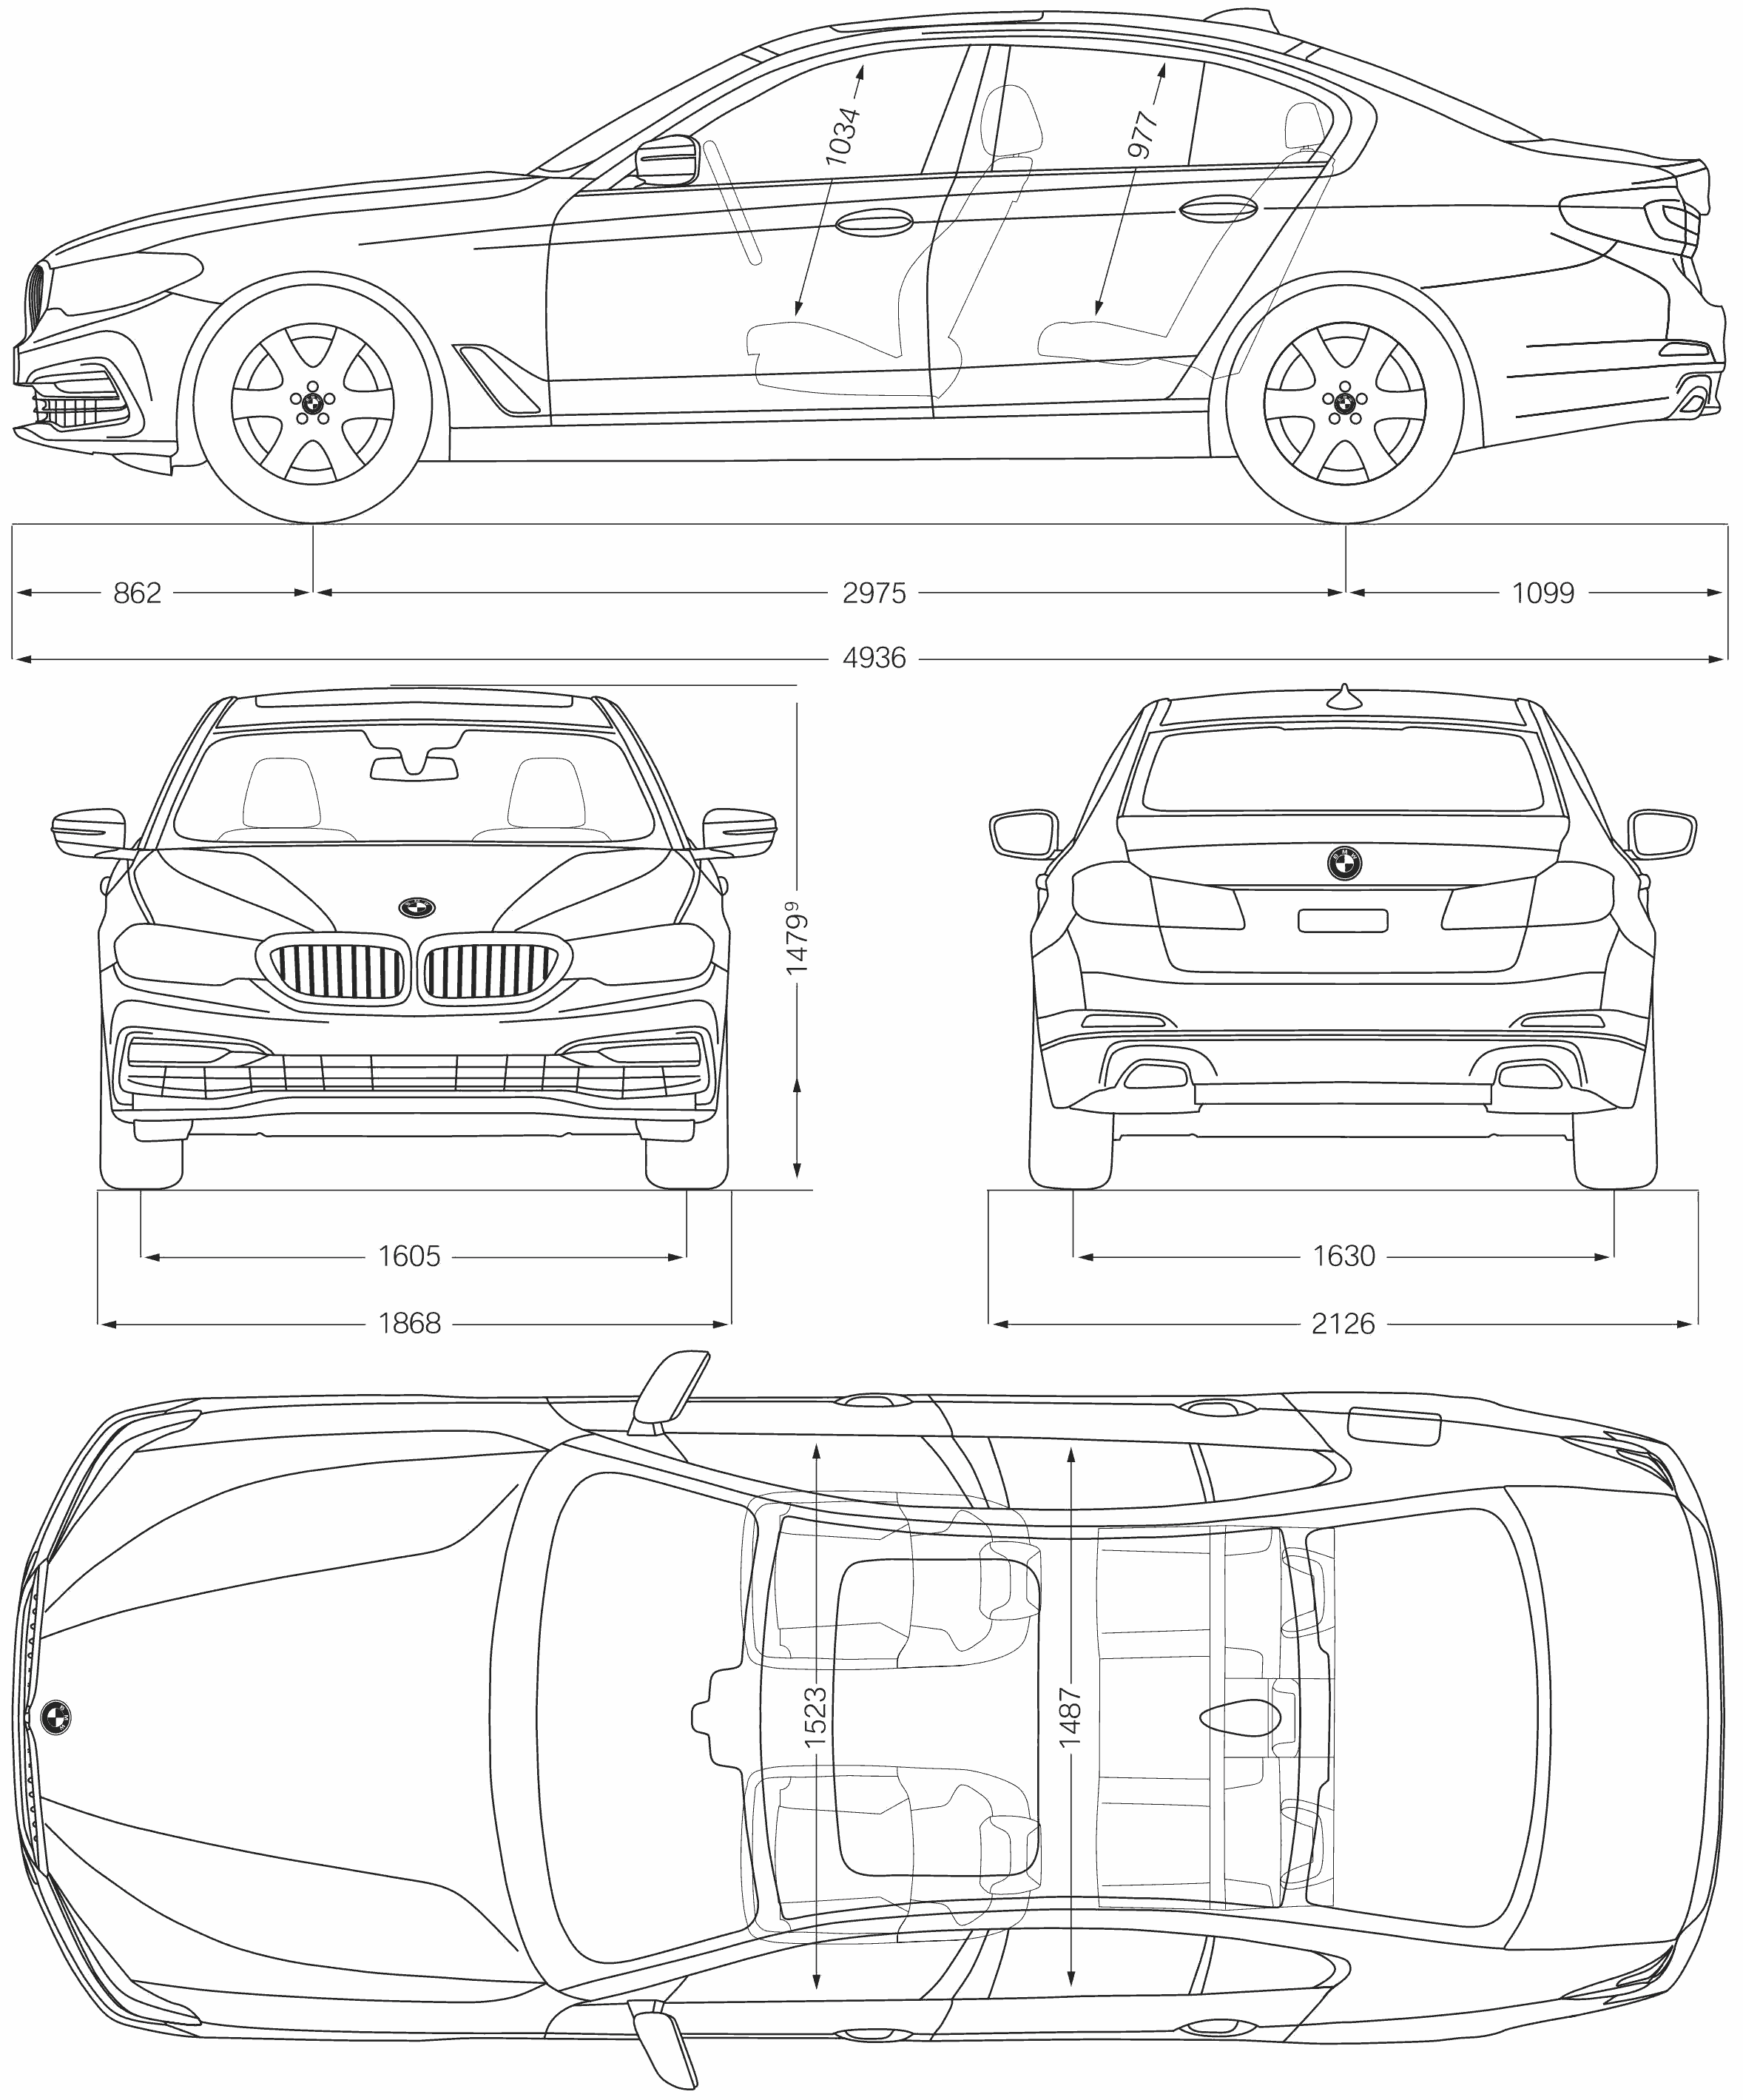 BMW 5 Series Limousine blueprint